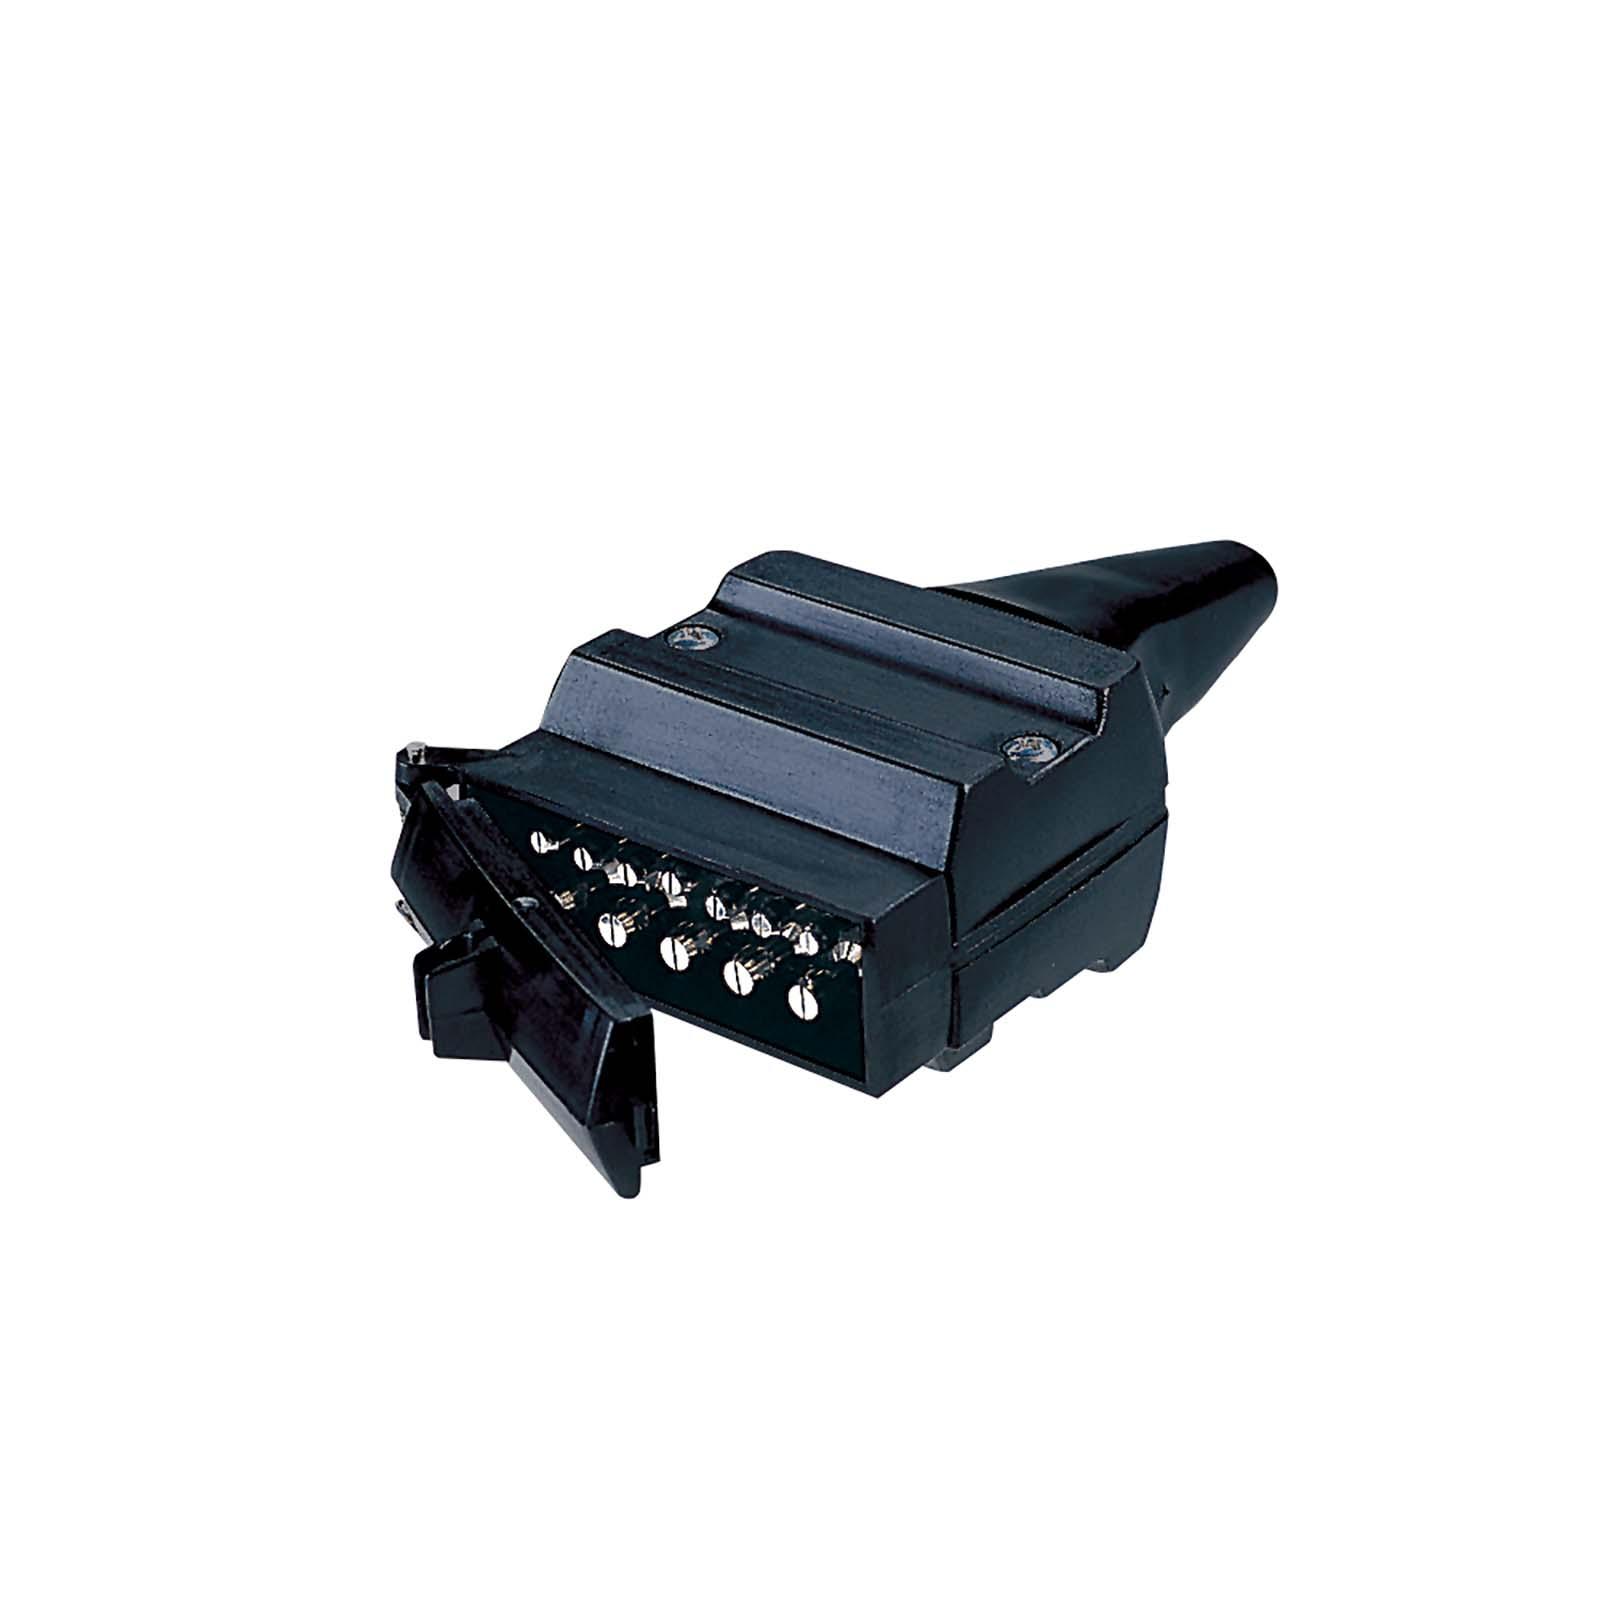 7 Pin 12V Black Plastic Car Trailer Socket Plug Adapter Wiring Harness Connector Car Accessories Trailer Socket 